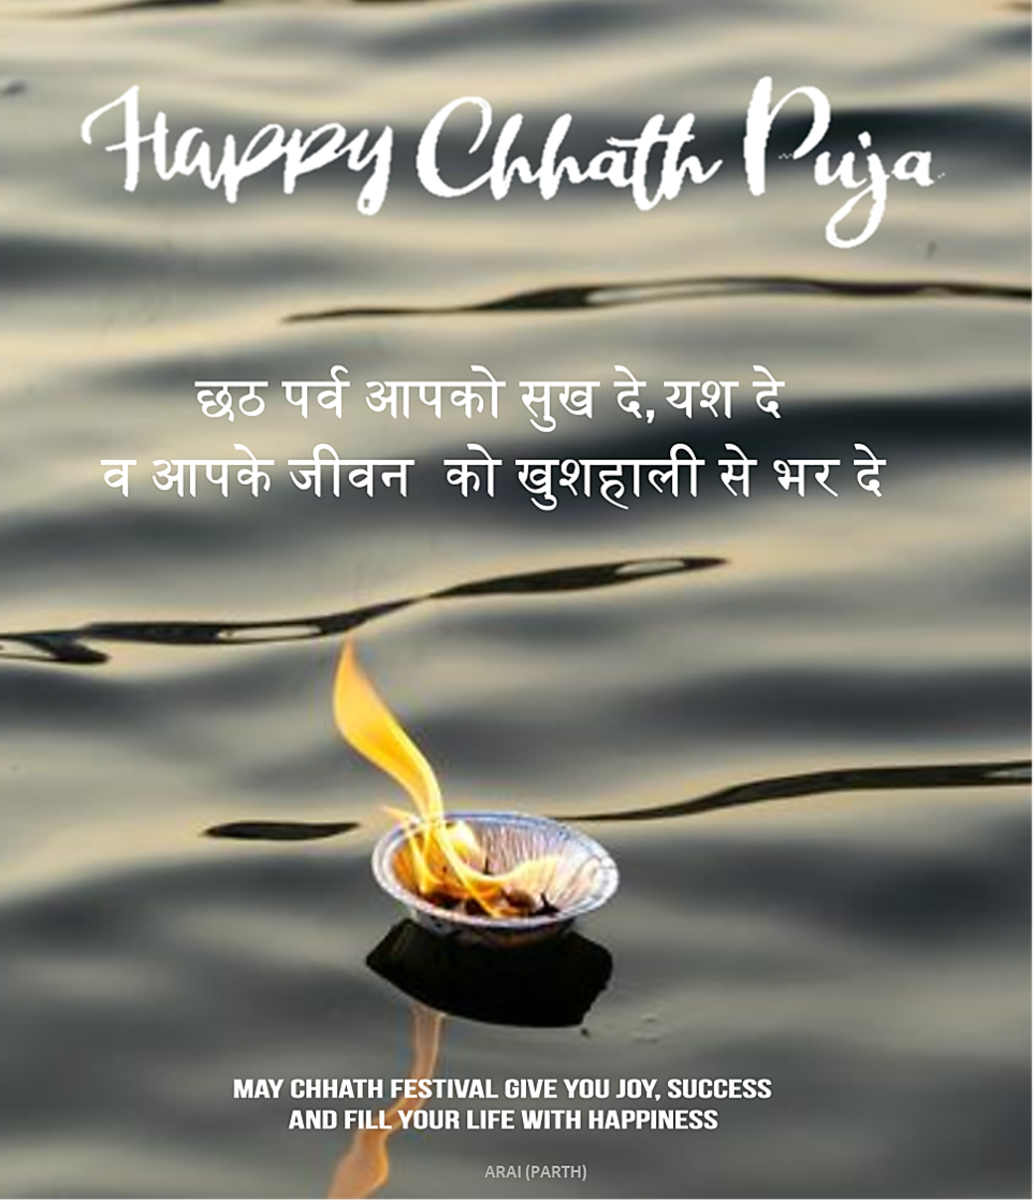 Chhath puja wishes in Hindi